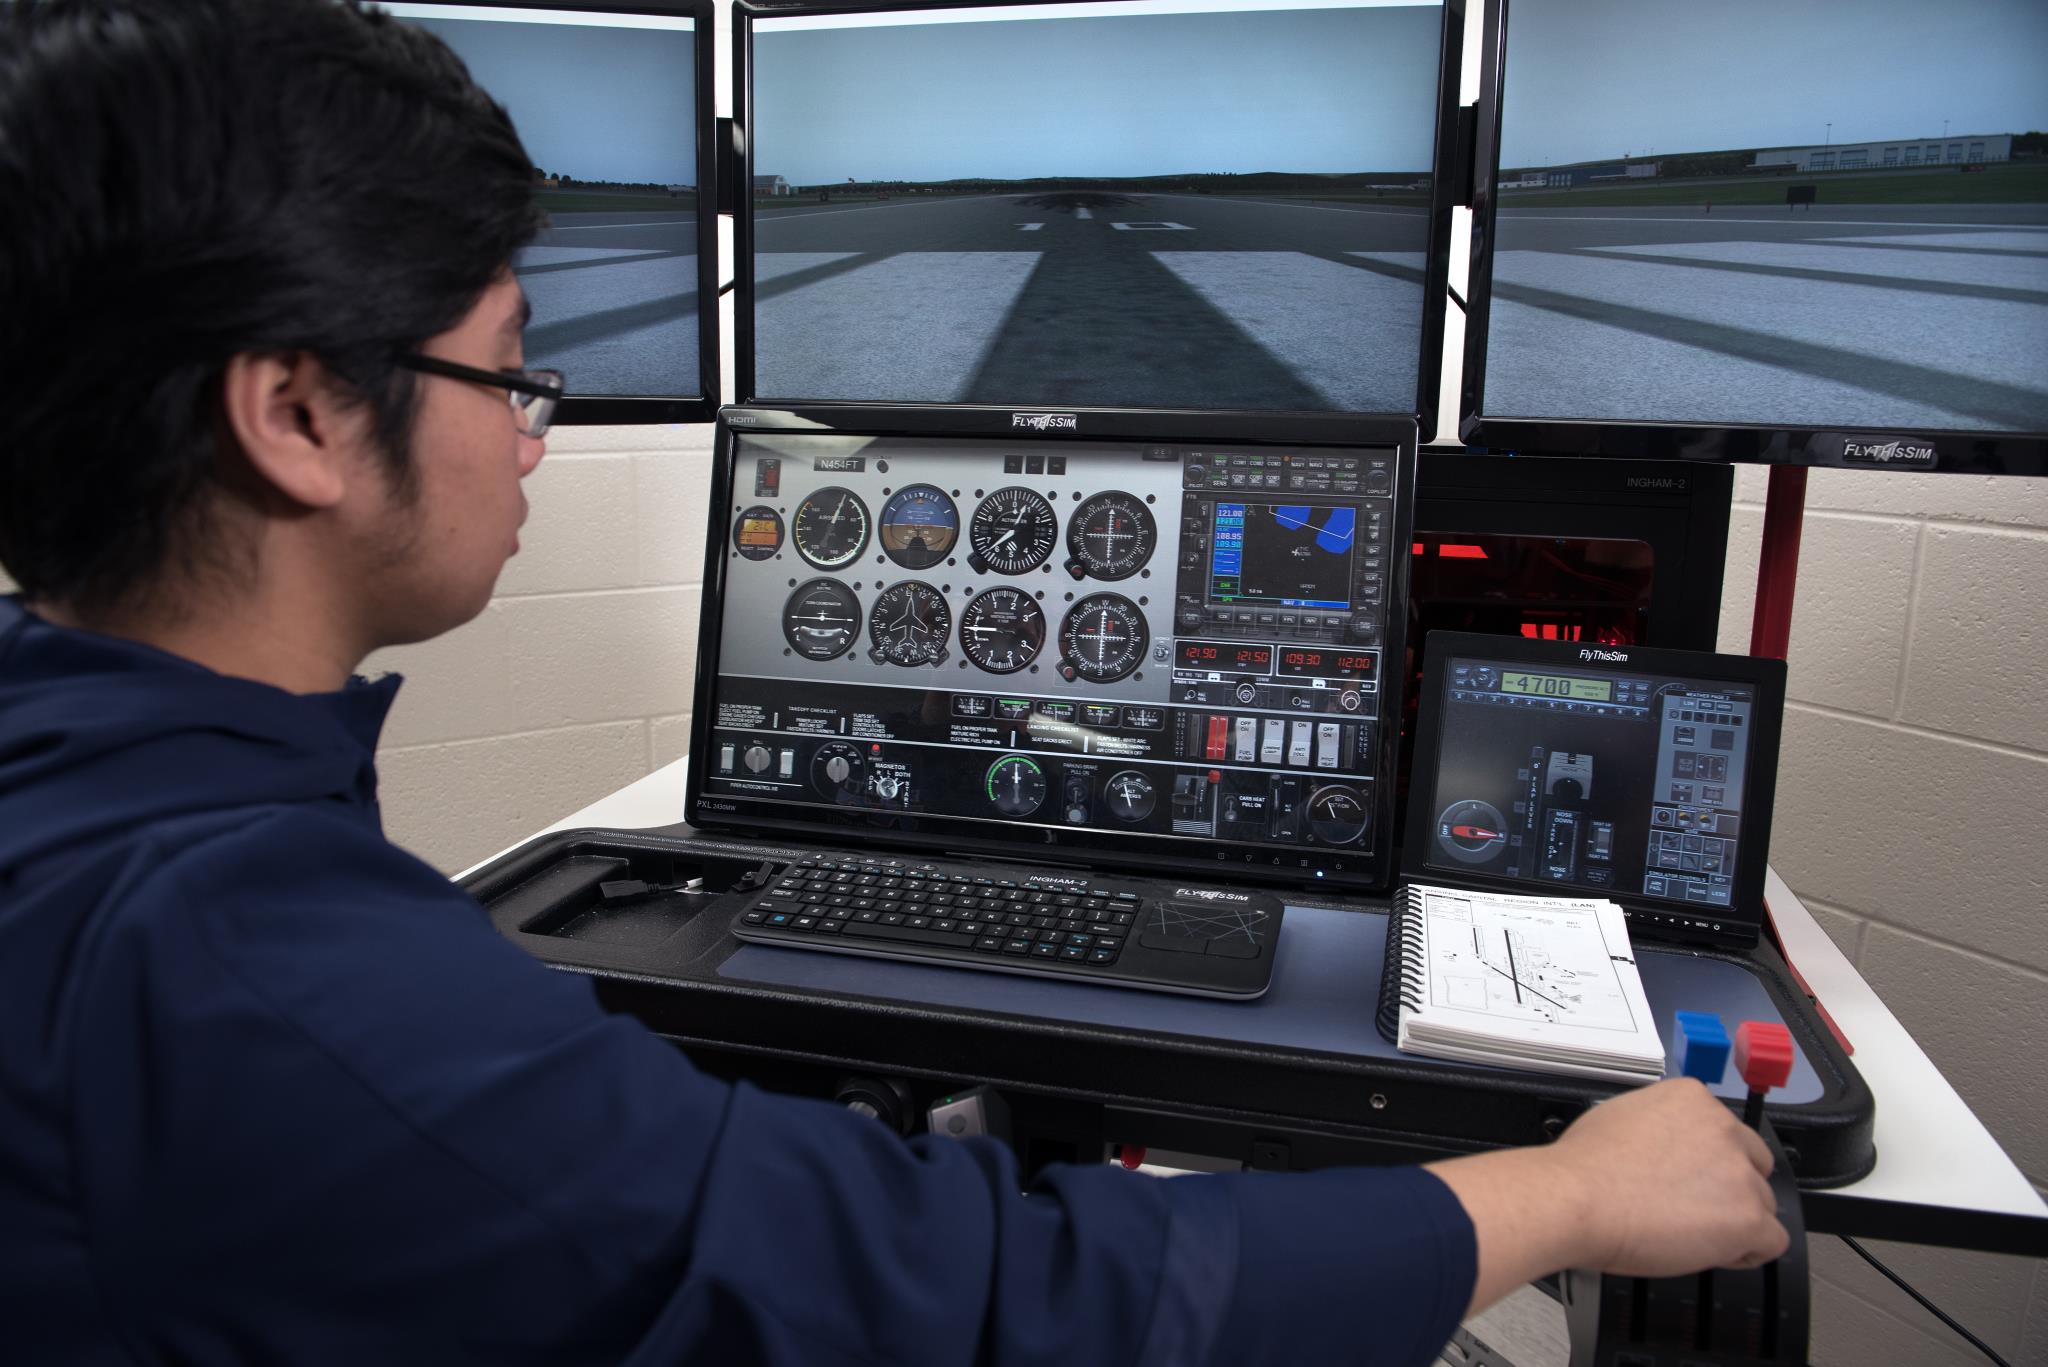 Aviation student simulates a flight on simulator equipment in the classroom.